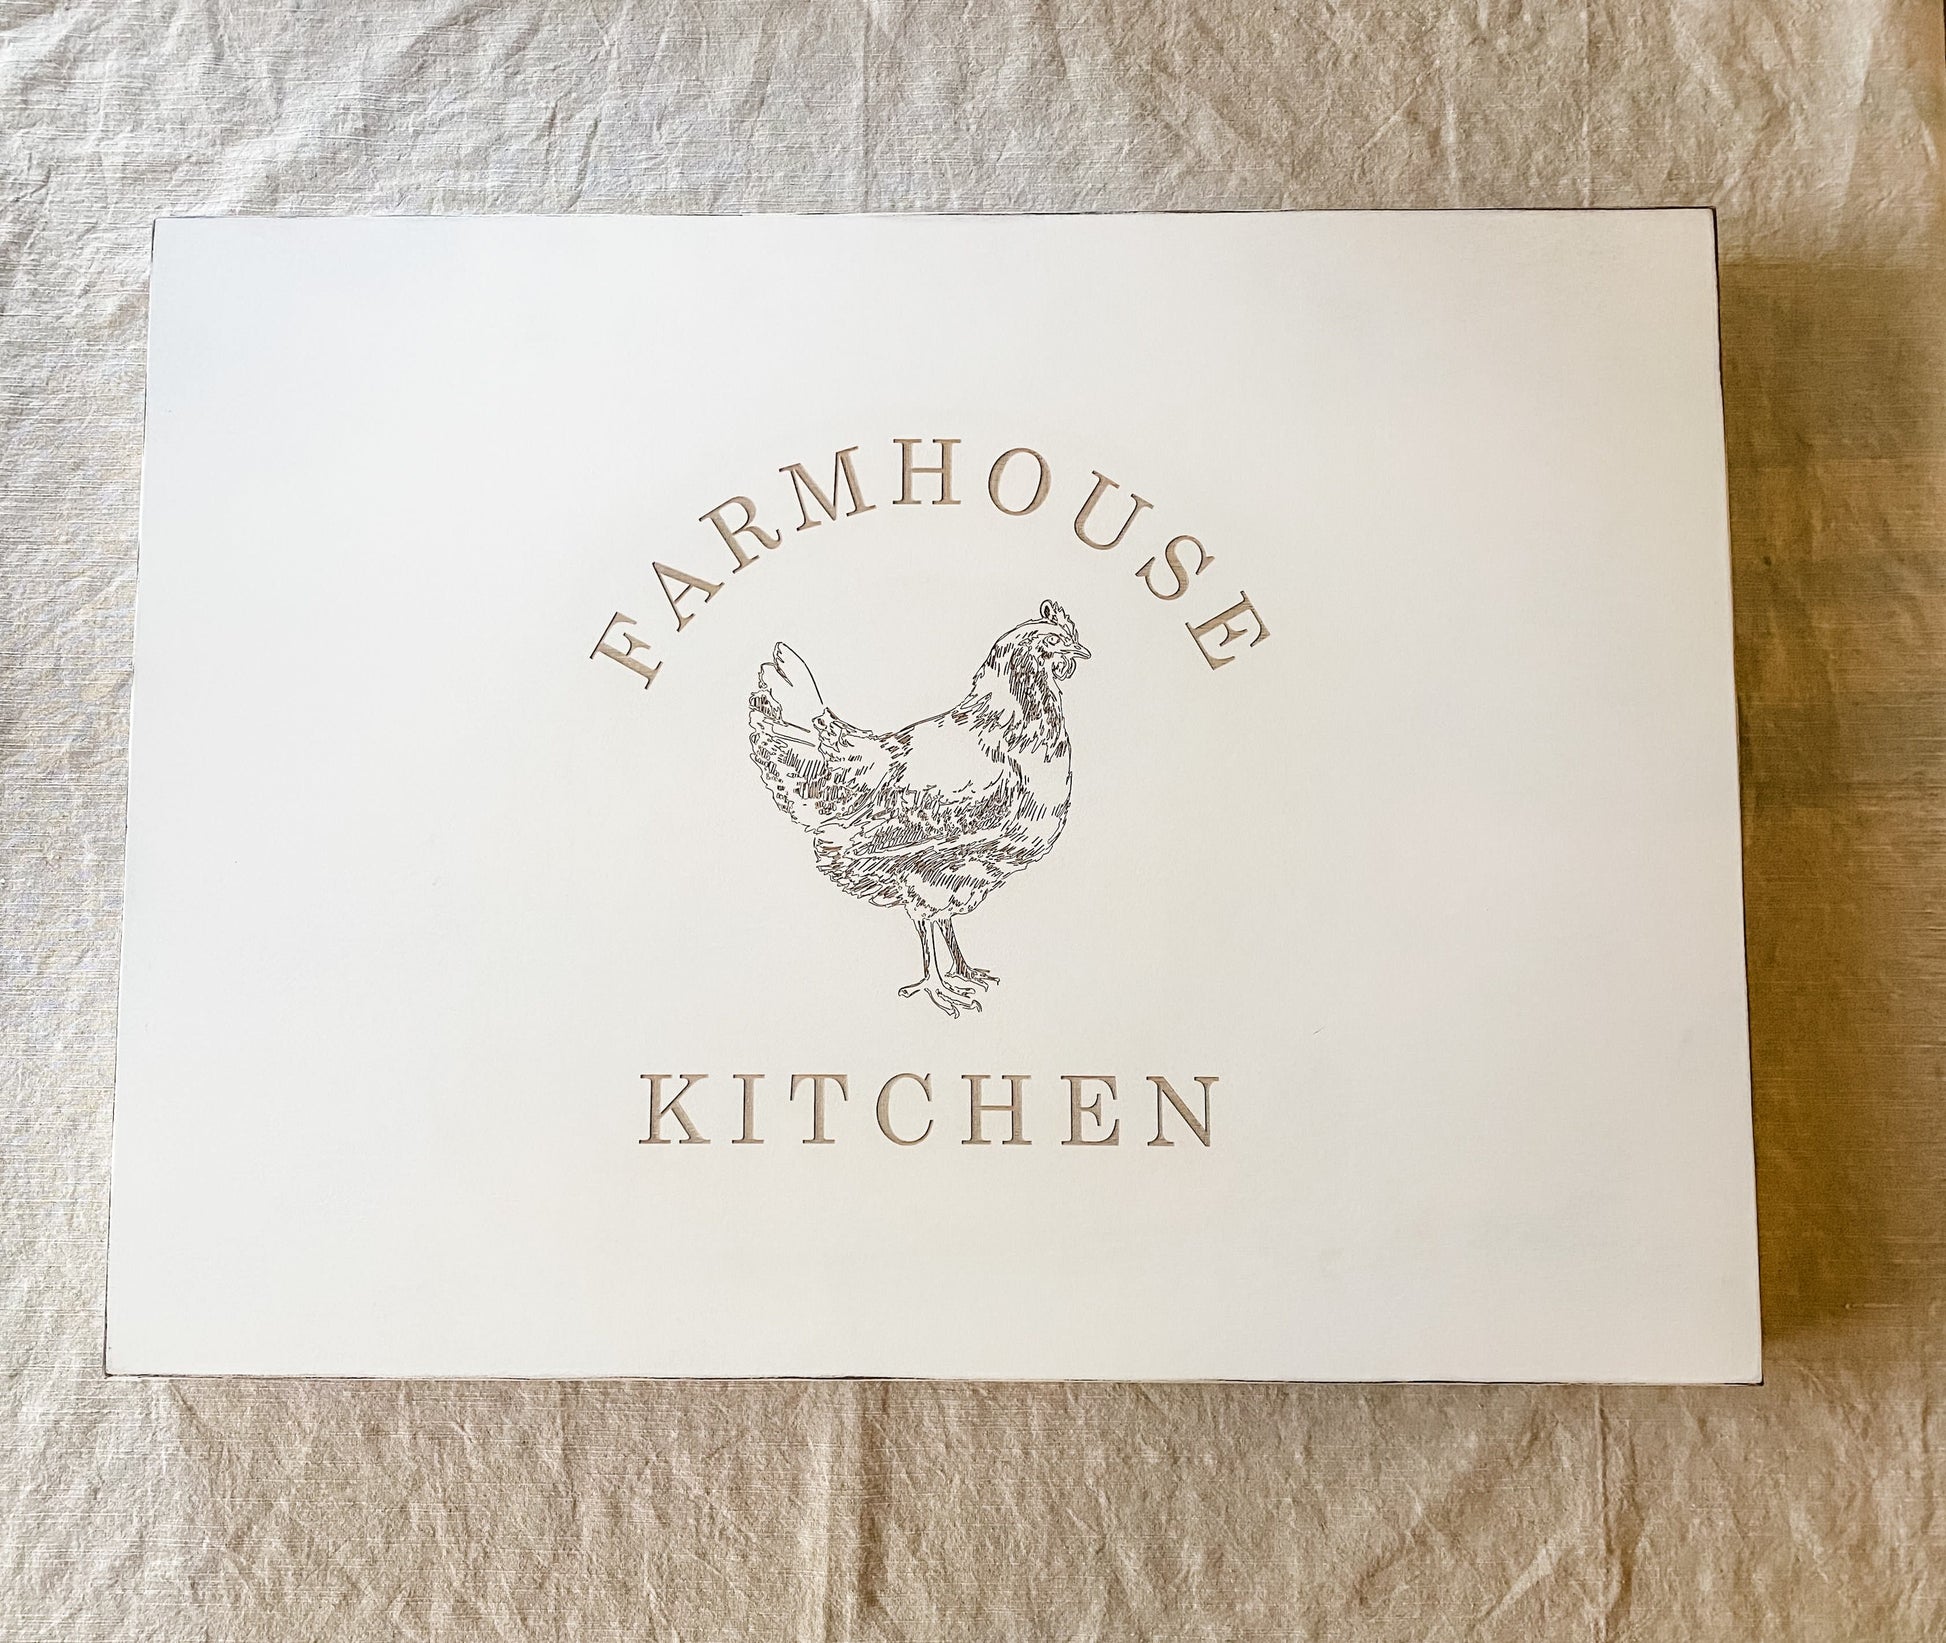 Ivory Distressed Farmhouse Kitchen Stove Cover Noodle board – Josephine  Thomas Home